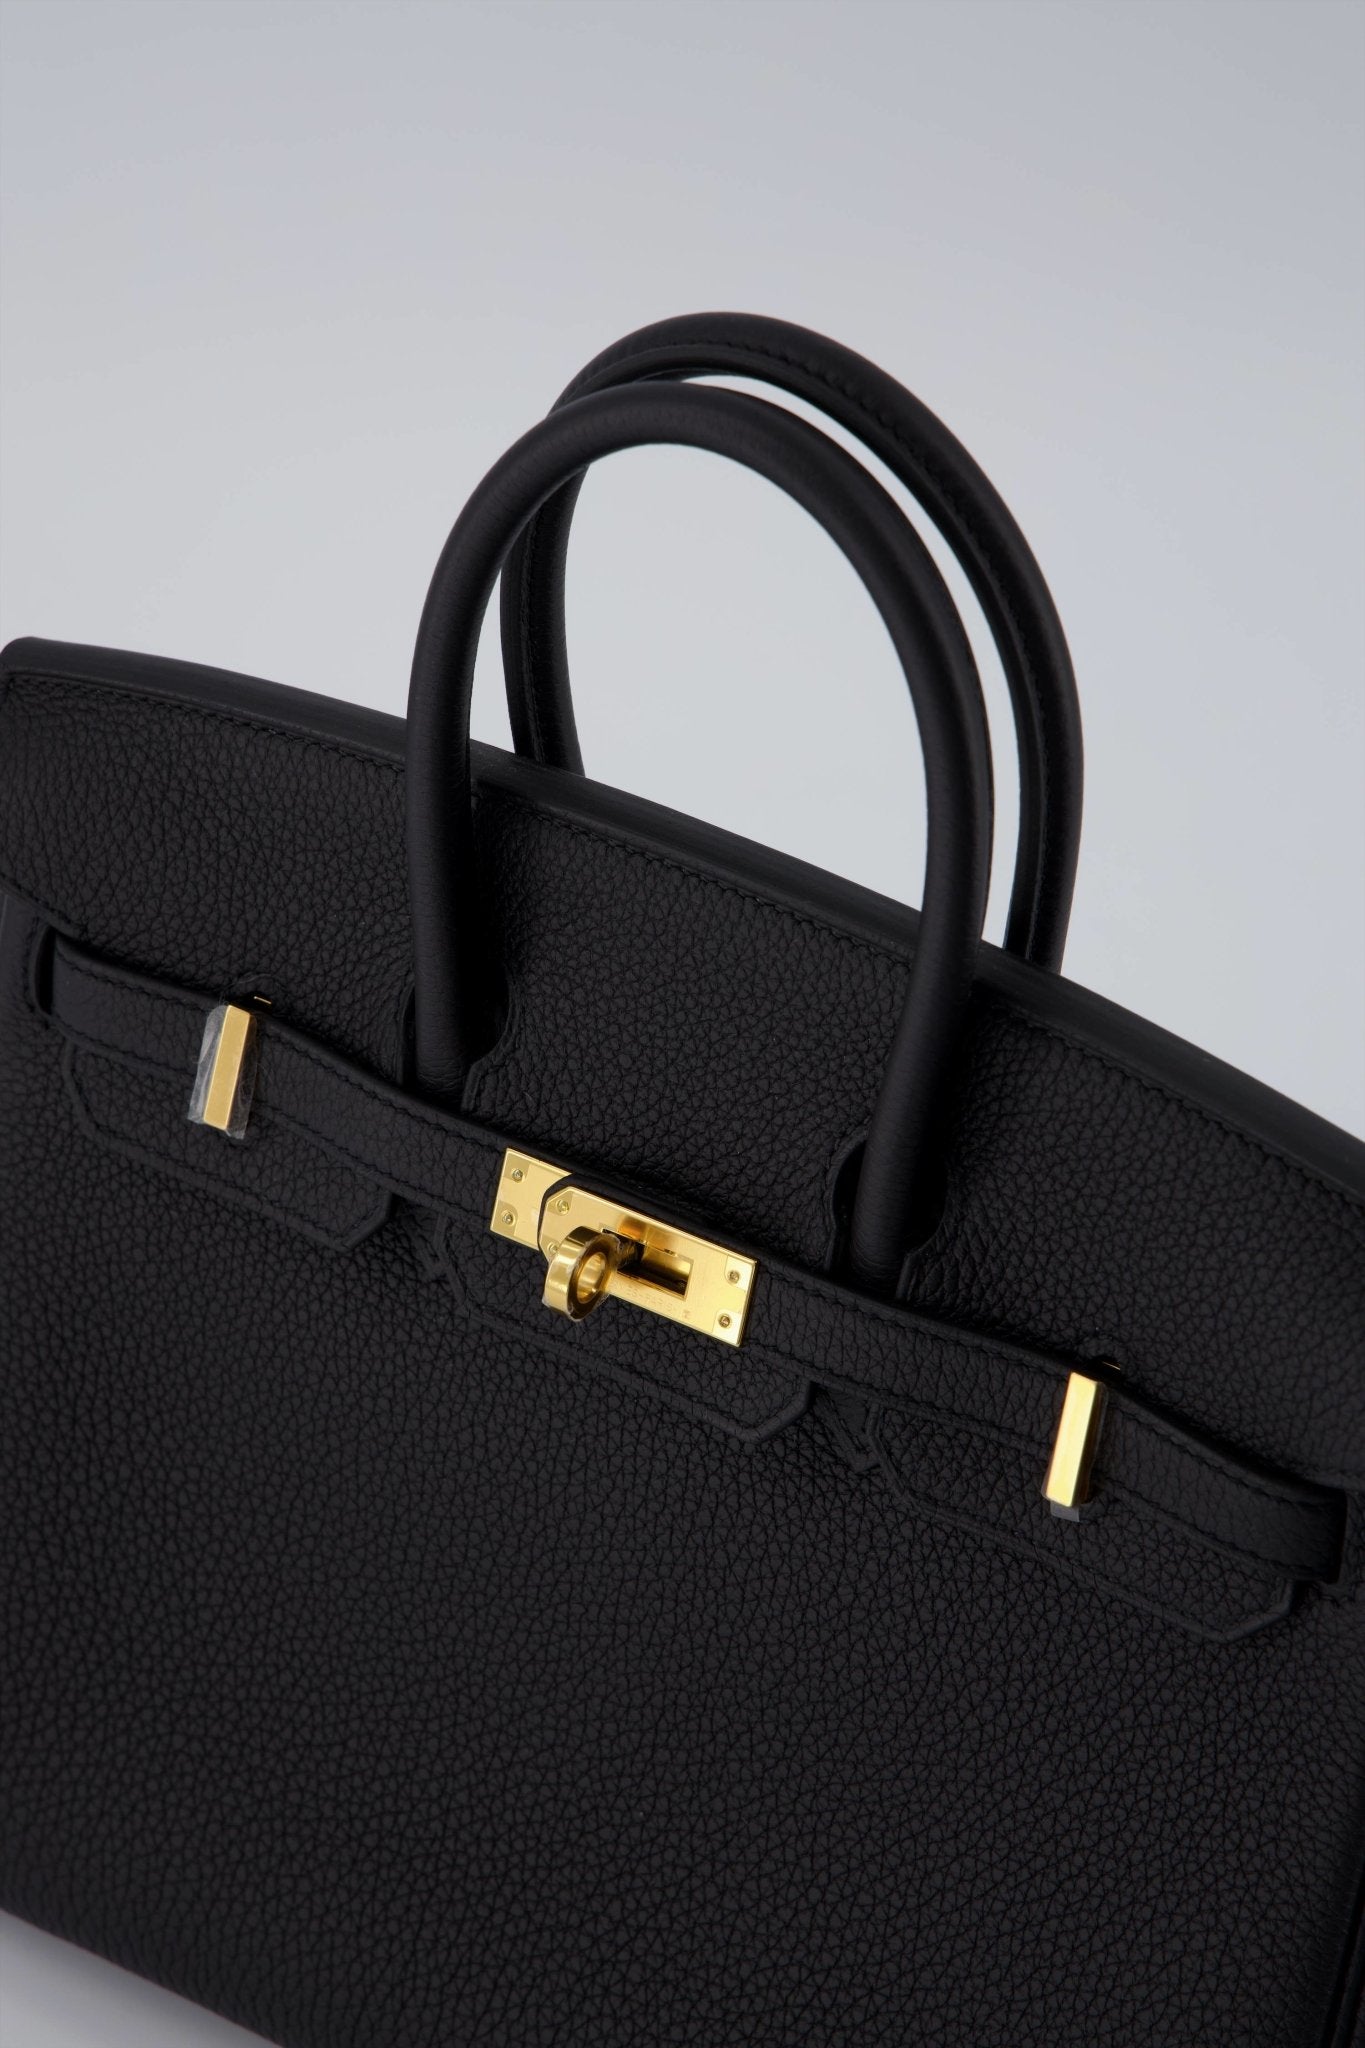 *Holy Grail* Hermes Birkin 25 Handbag Black Togo Leather With Gold Hardware. Investment Piece